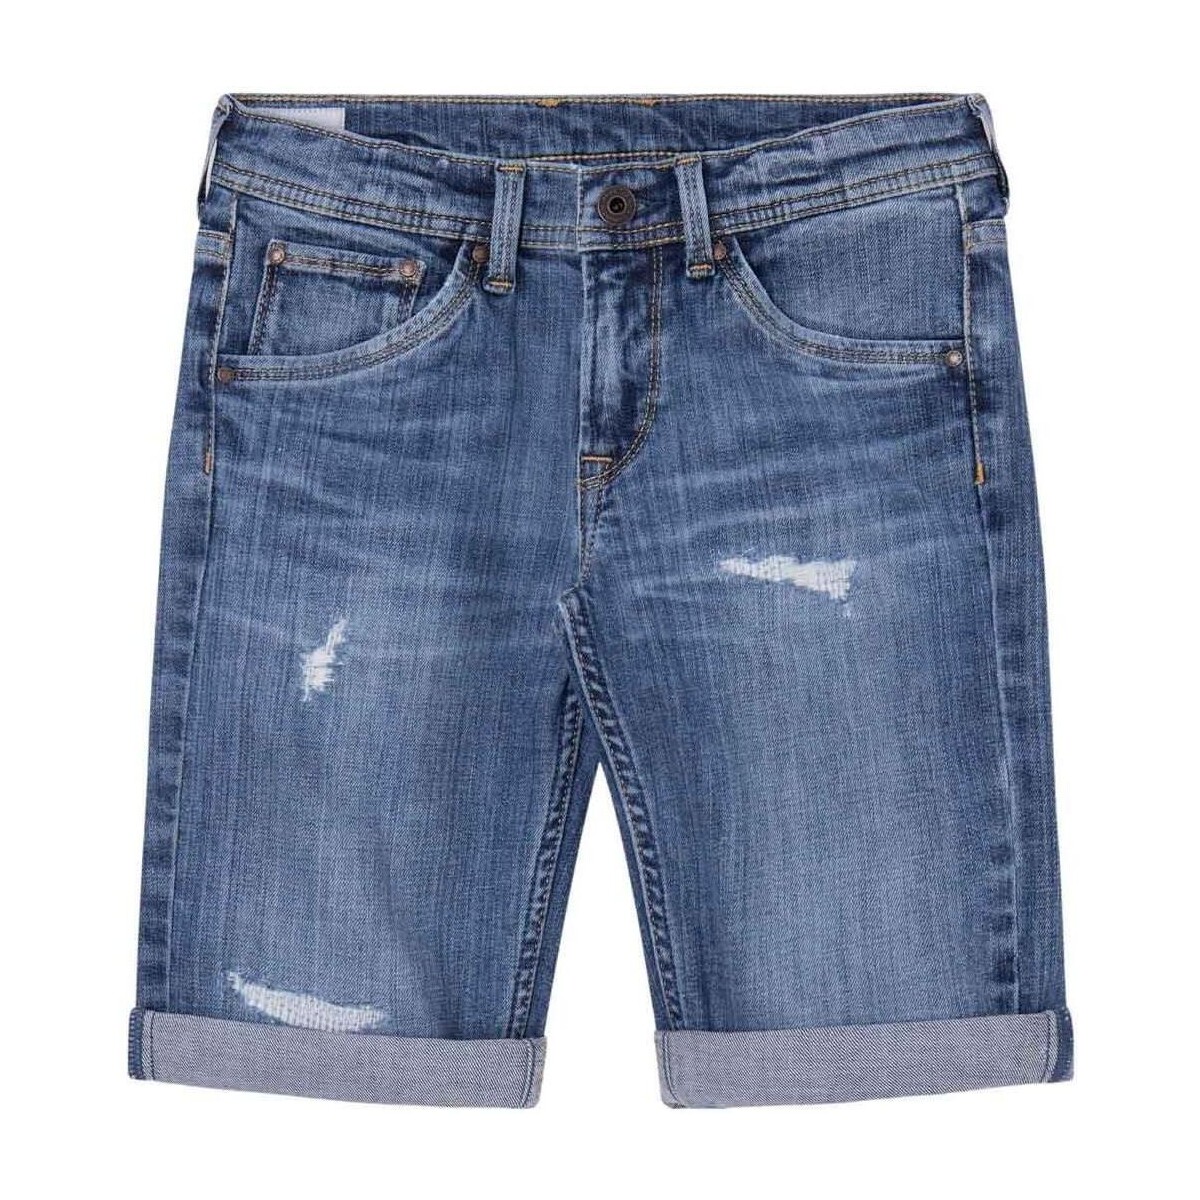 textil Niño Shorts / Bermudas Pepe jeans CASHED SHORT REPAIR Azul